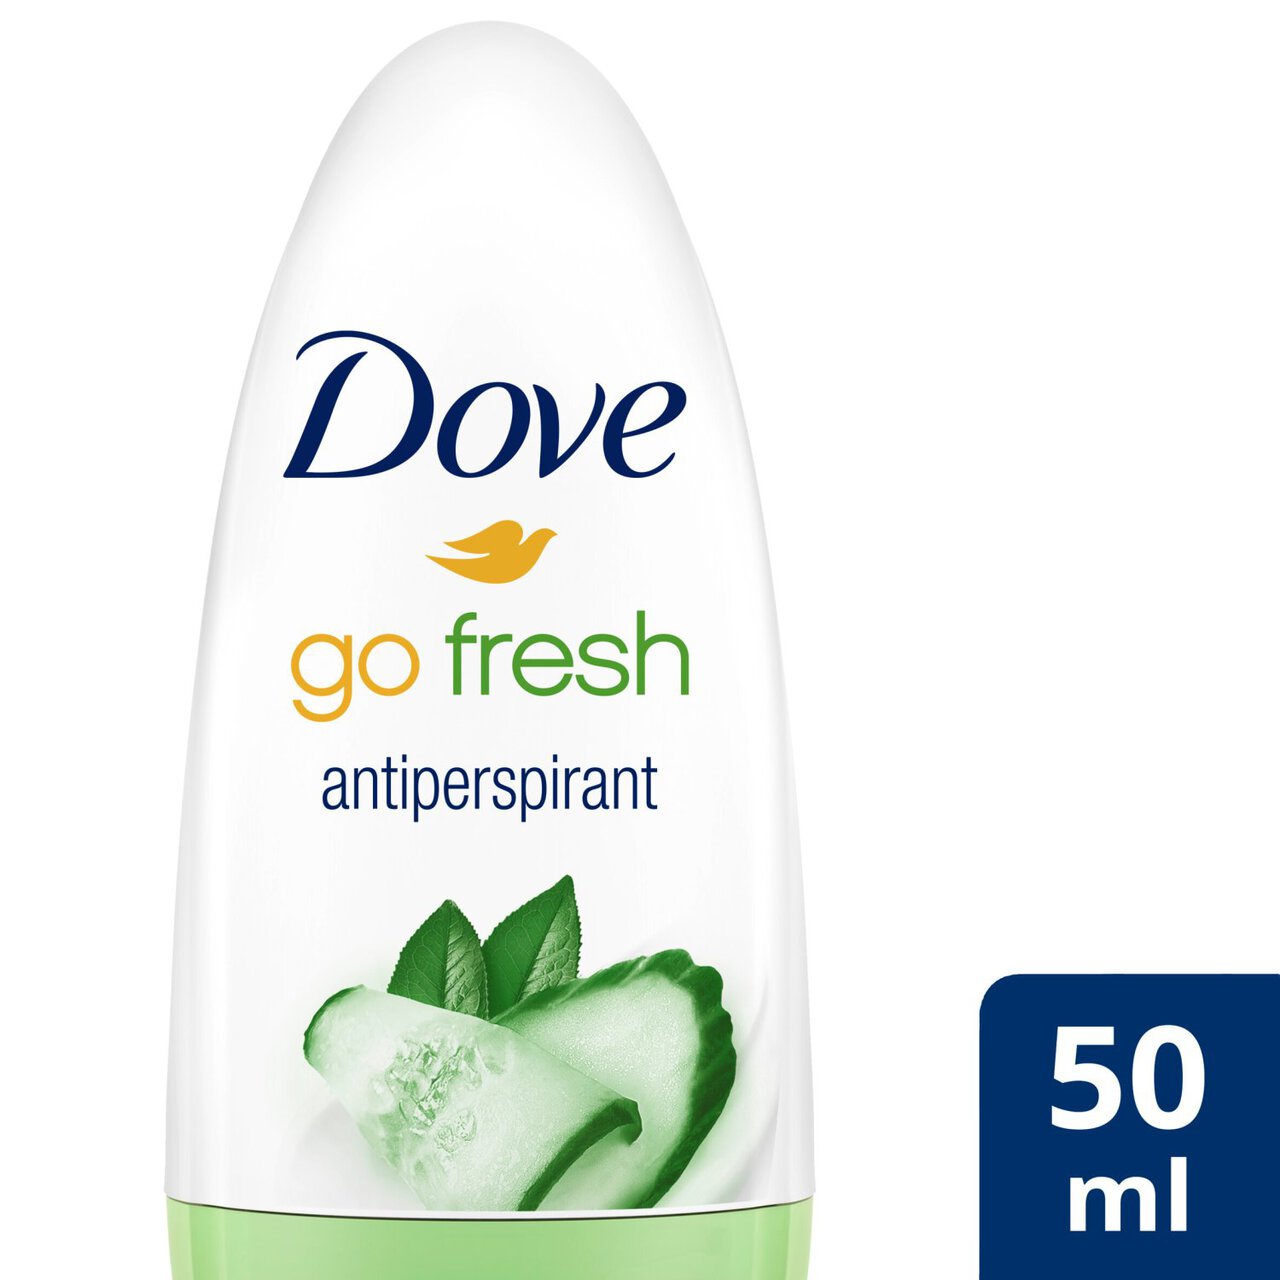 Dove Go Fresh Cucumber & Green Tea Roll-On Anti-Perspirant Deodorant 50ml